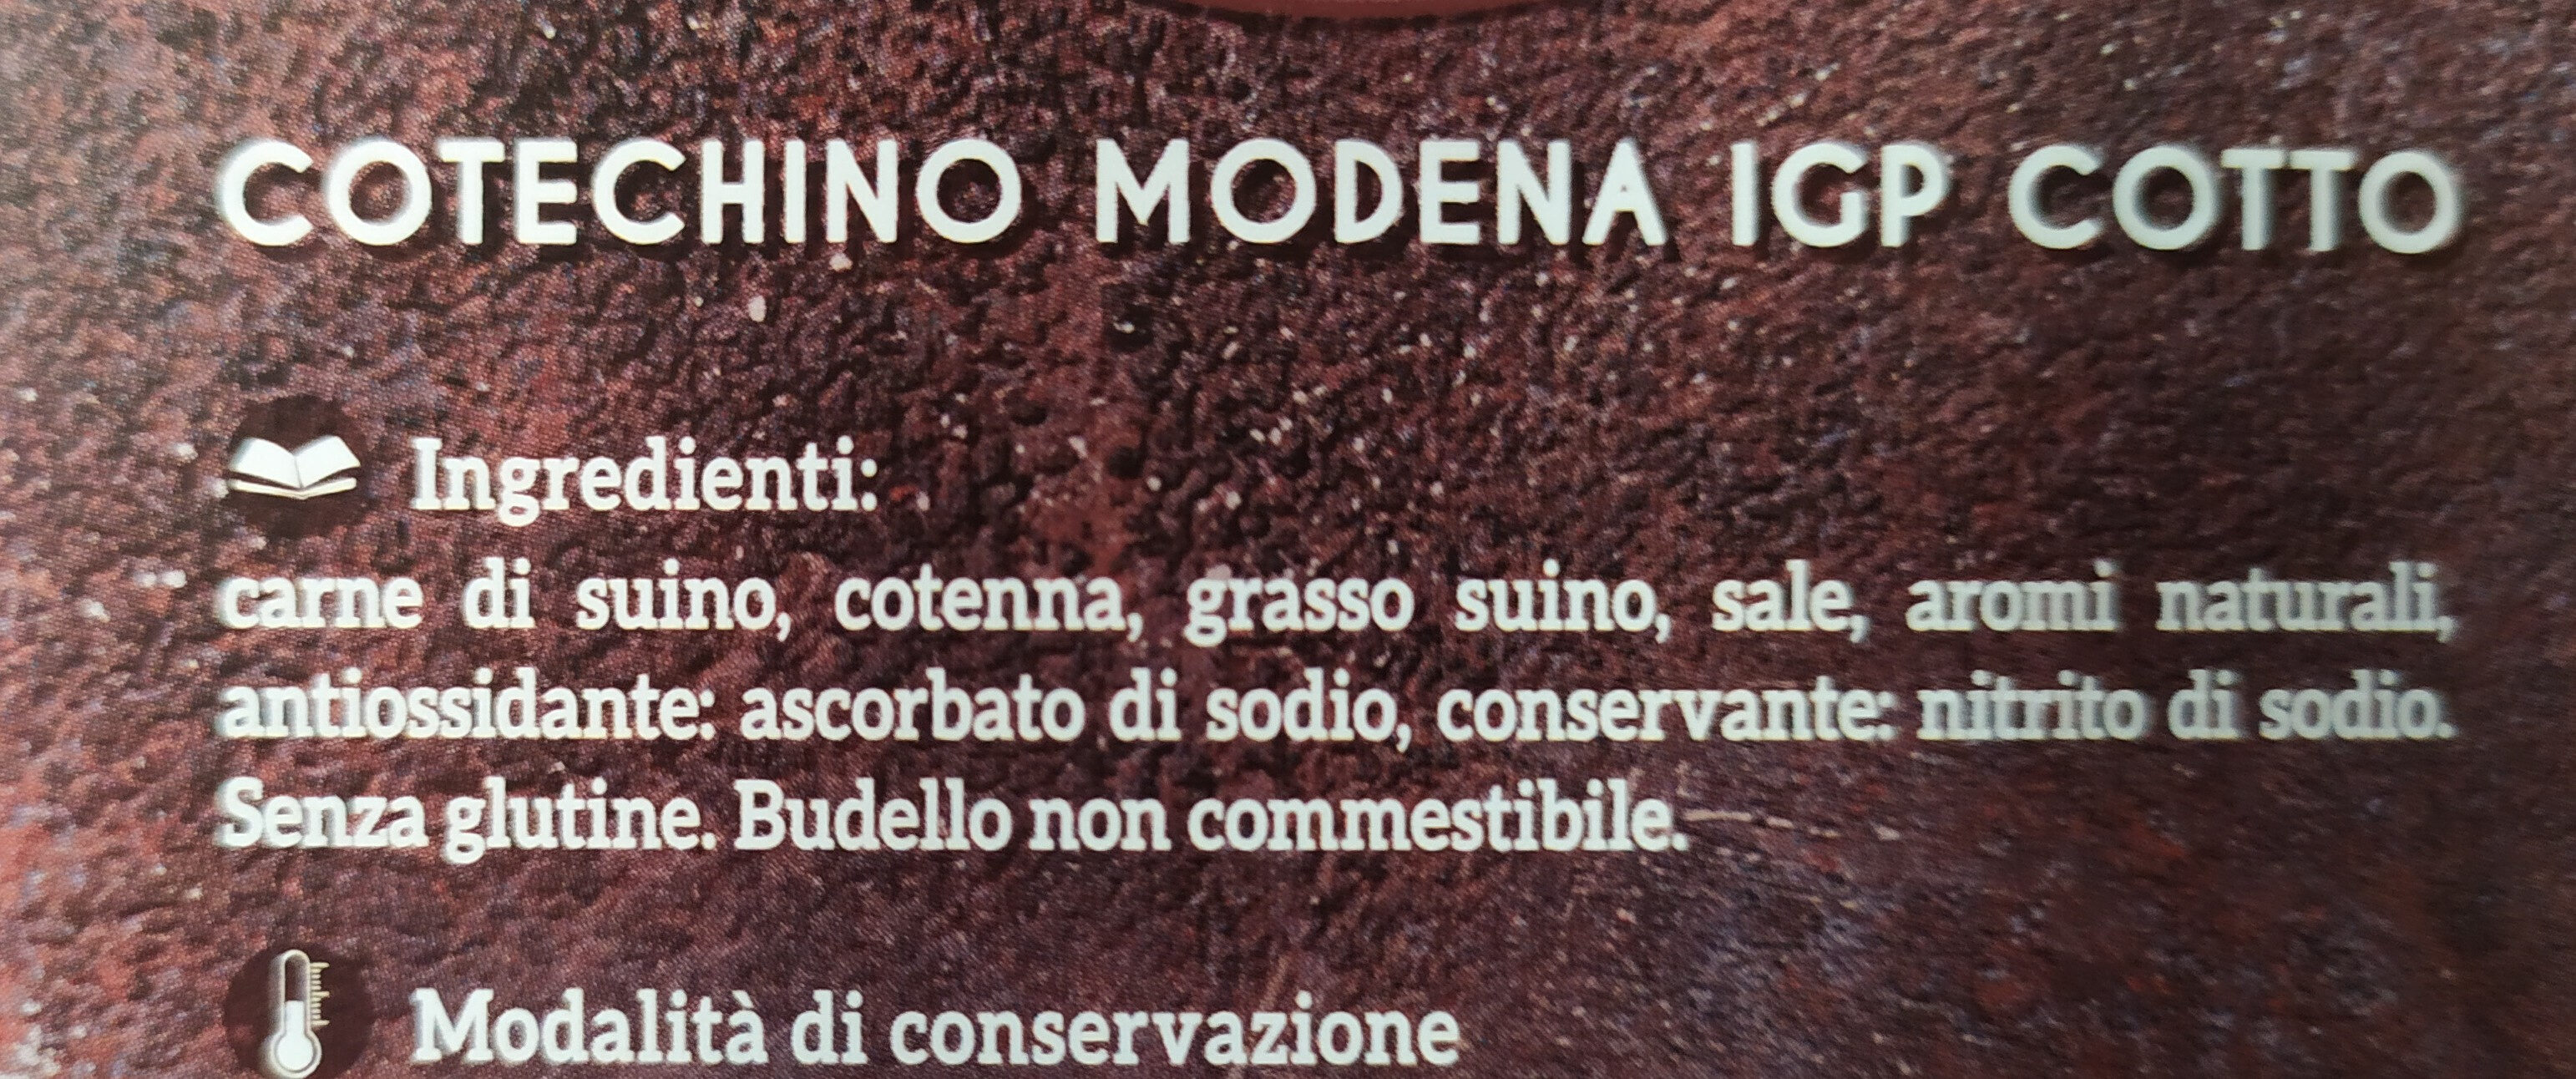 Cotechino Modena IGP - Ingredienti